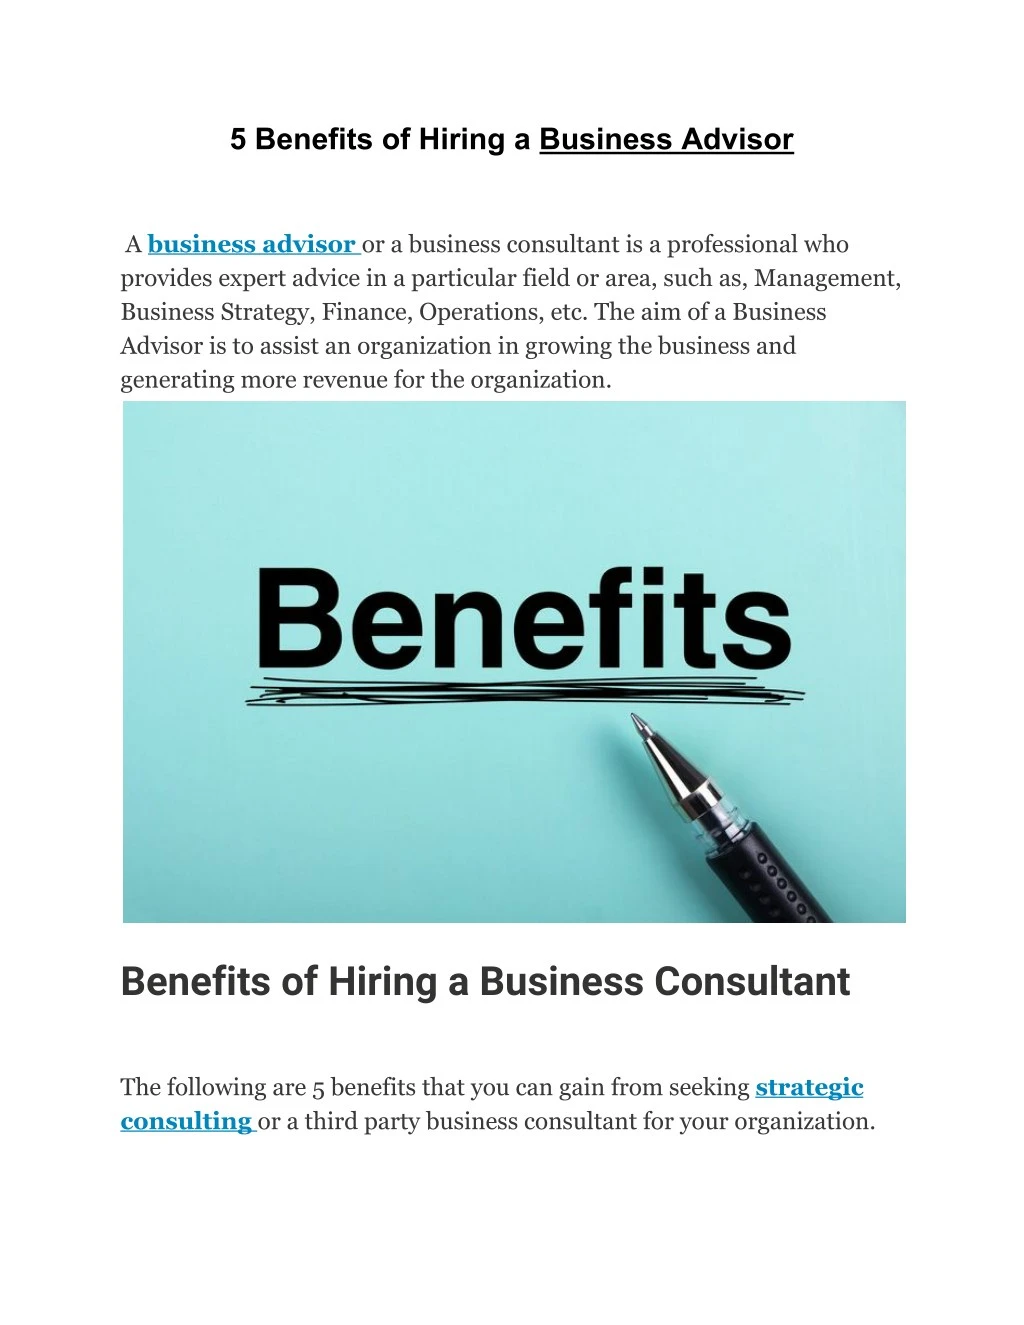 5 benefits of hiring a business advisor